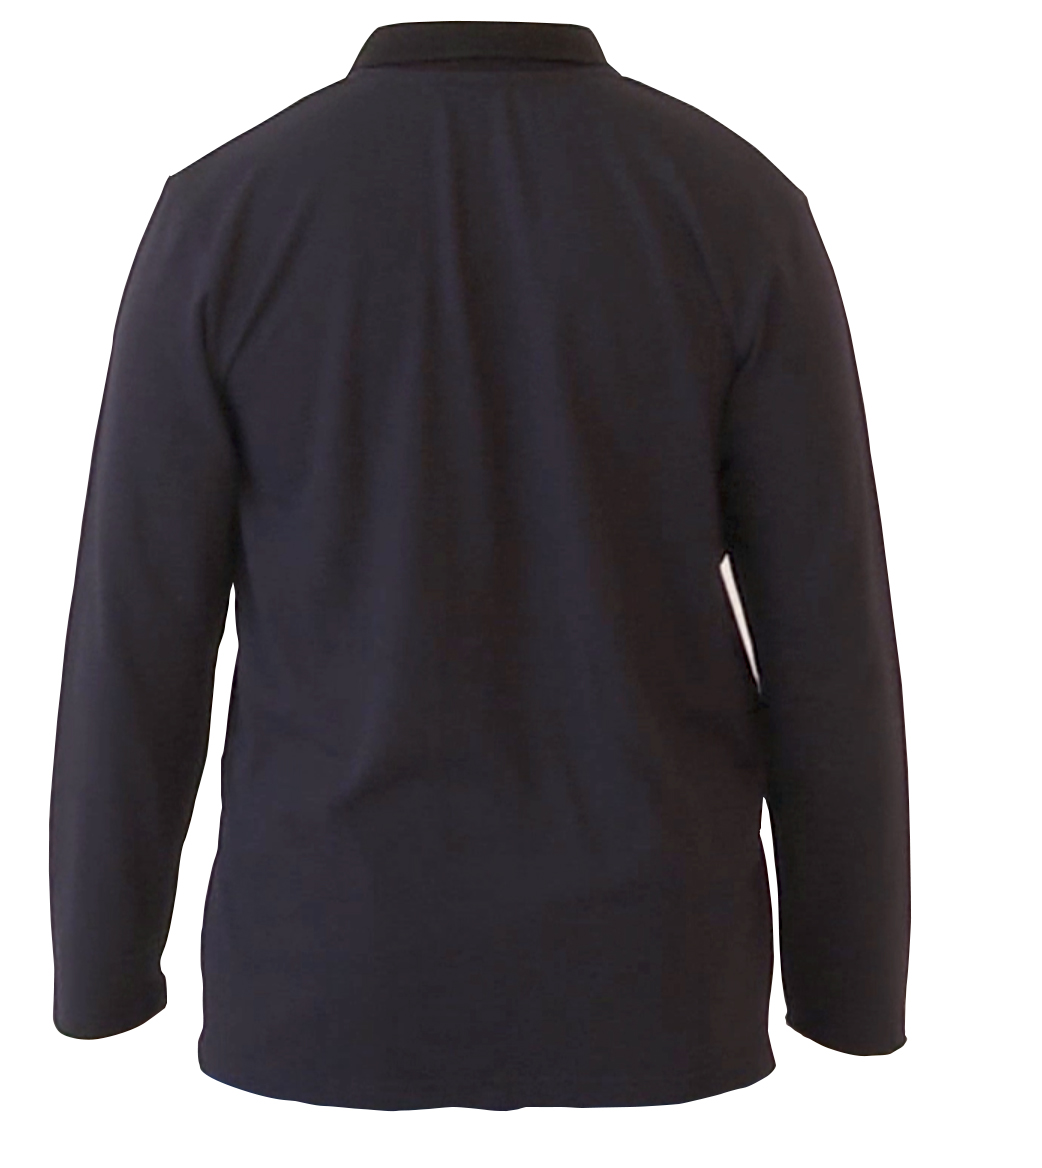 ESD Polo-Shirt Back AQGZ Style Black Unisex L Antistatic Clothing ESD Garment - 473.AQGZ-APS21-BKL